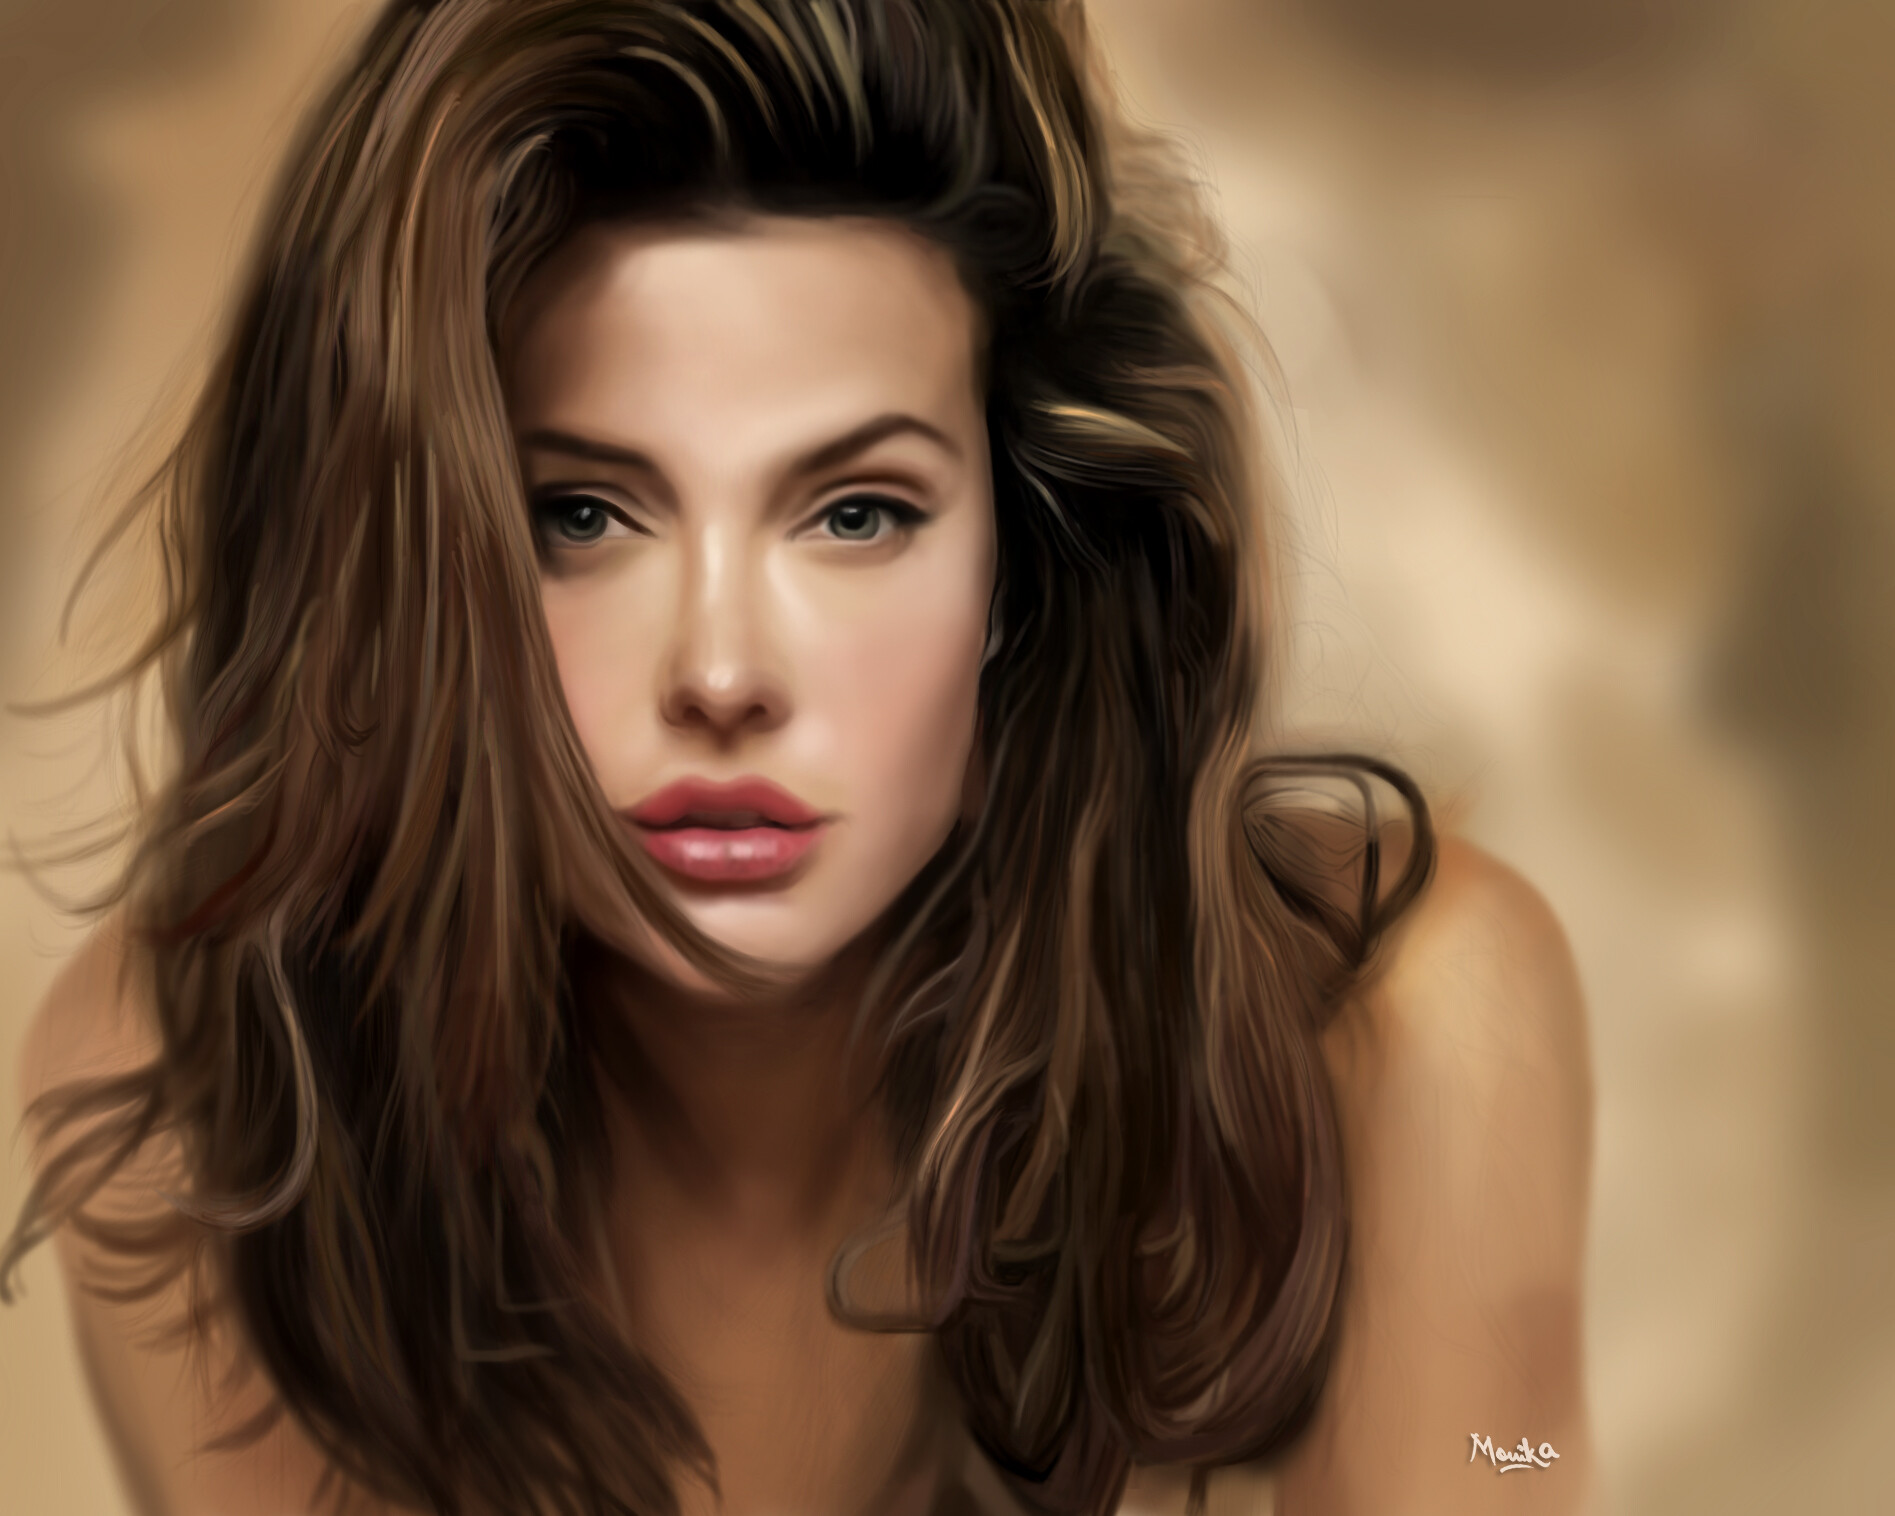 ArtStation - Digital Painting of Angelina Jolie